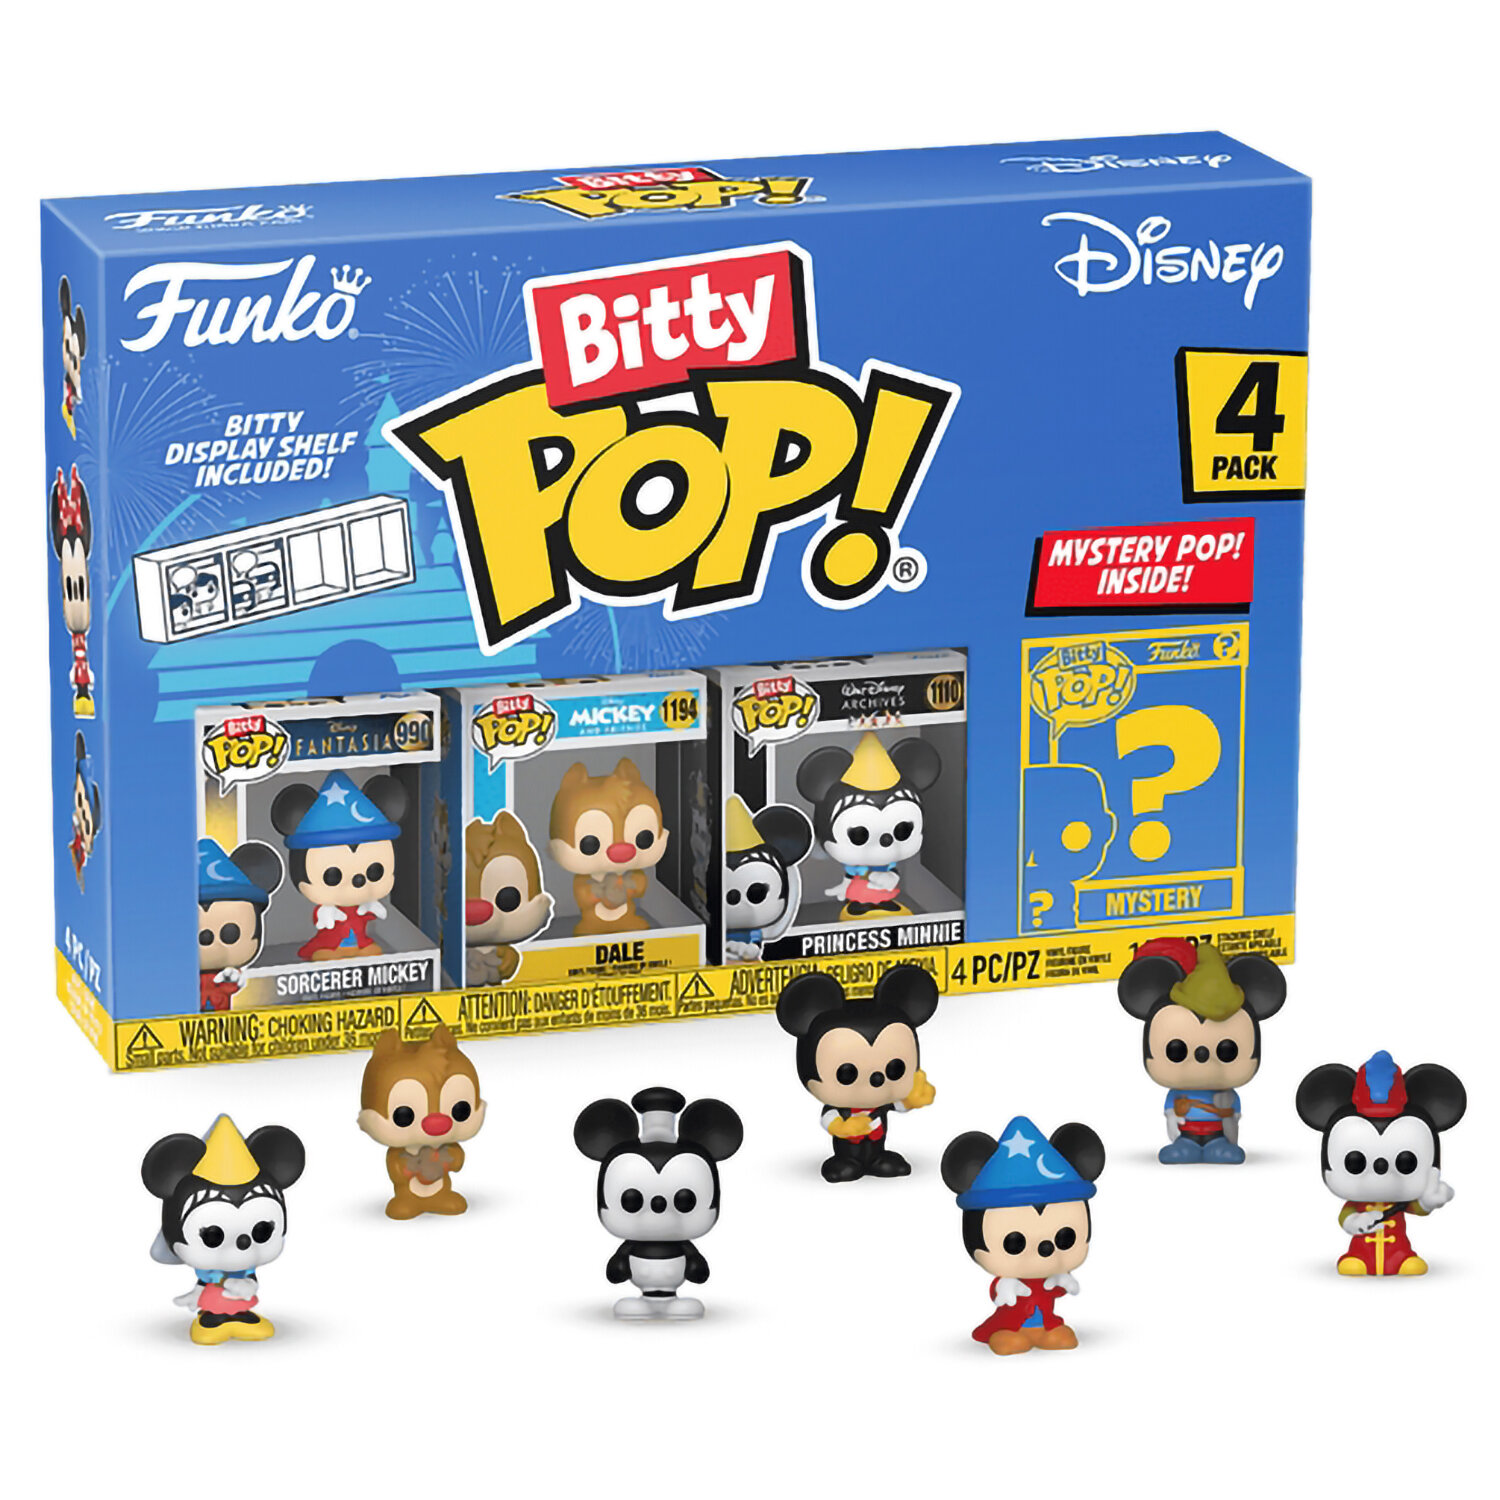 Фигурка Funko Bitty POP: Disney S3: Sorcerer Mickey+Dale+Princess Minnie+Mystery (1 of 4) 4PK 71321